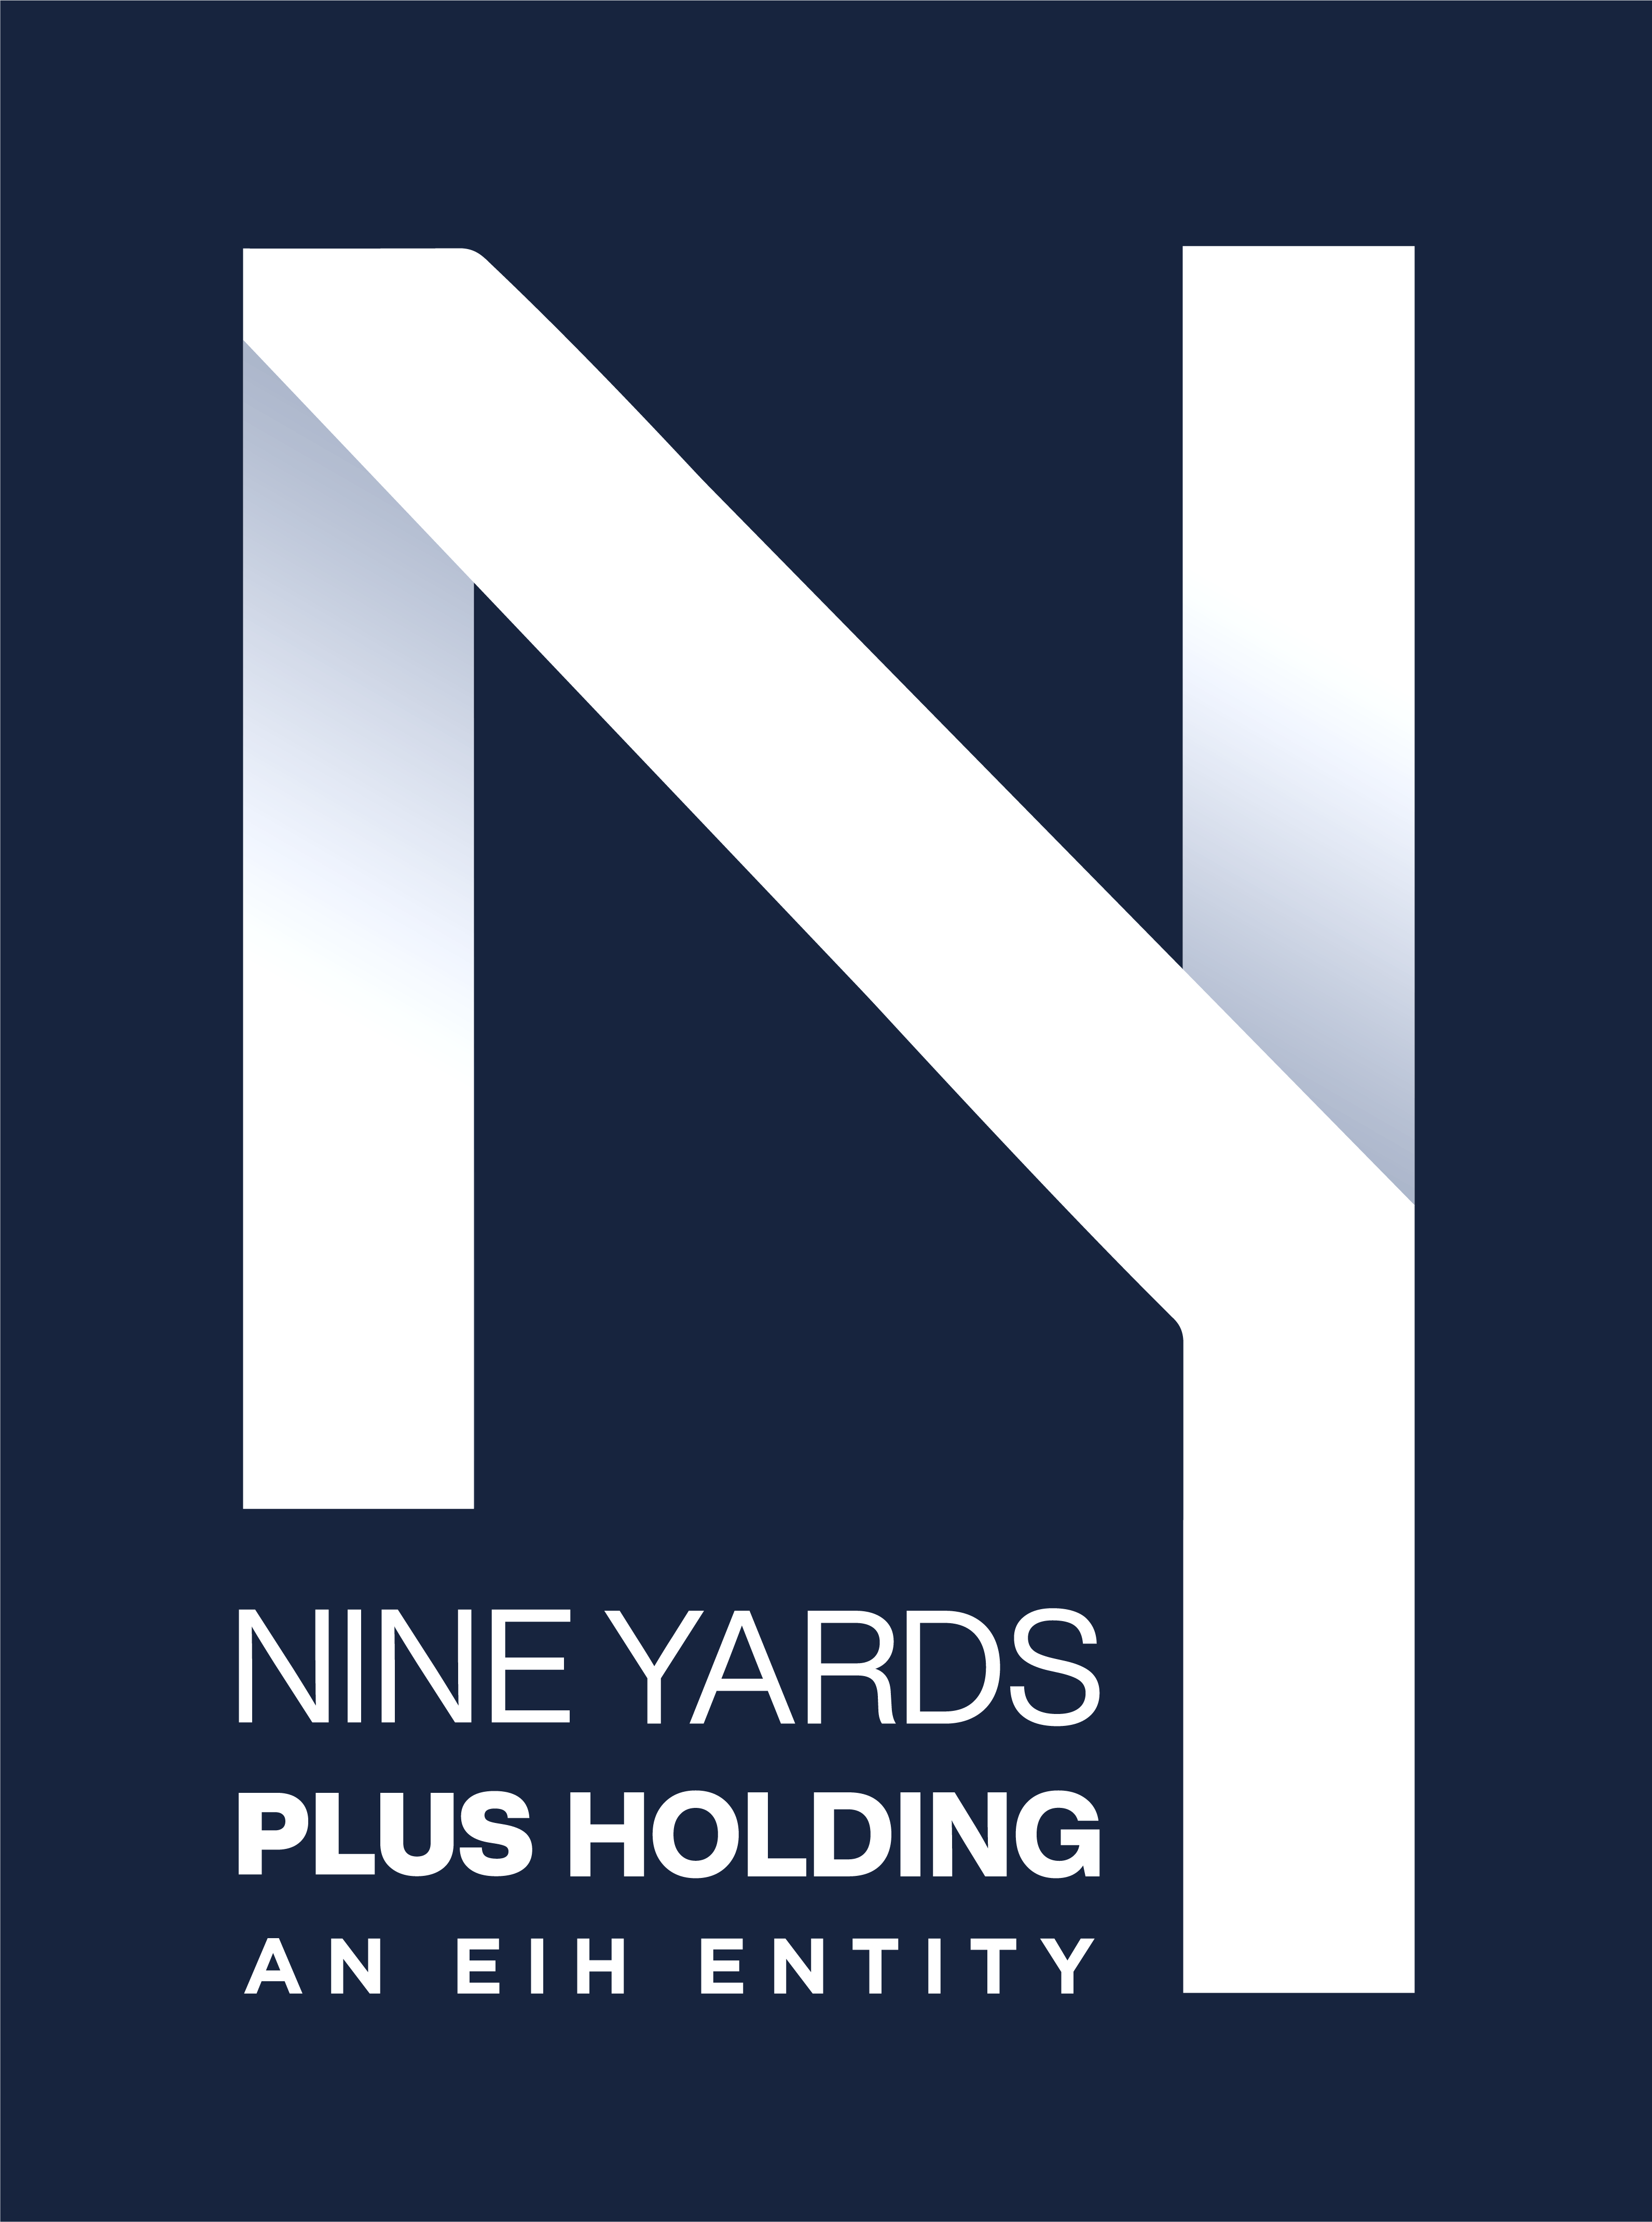 Nine yards logo